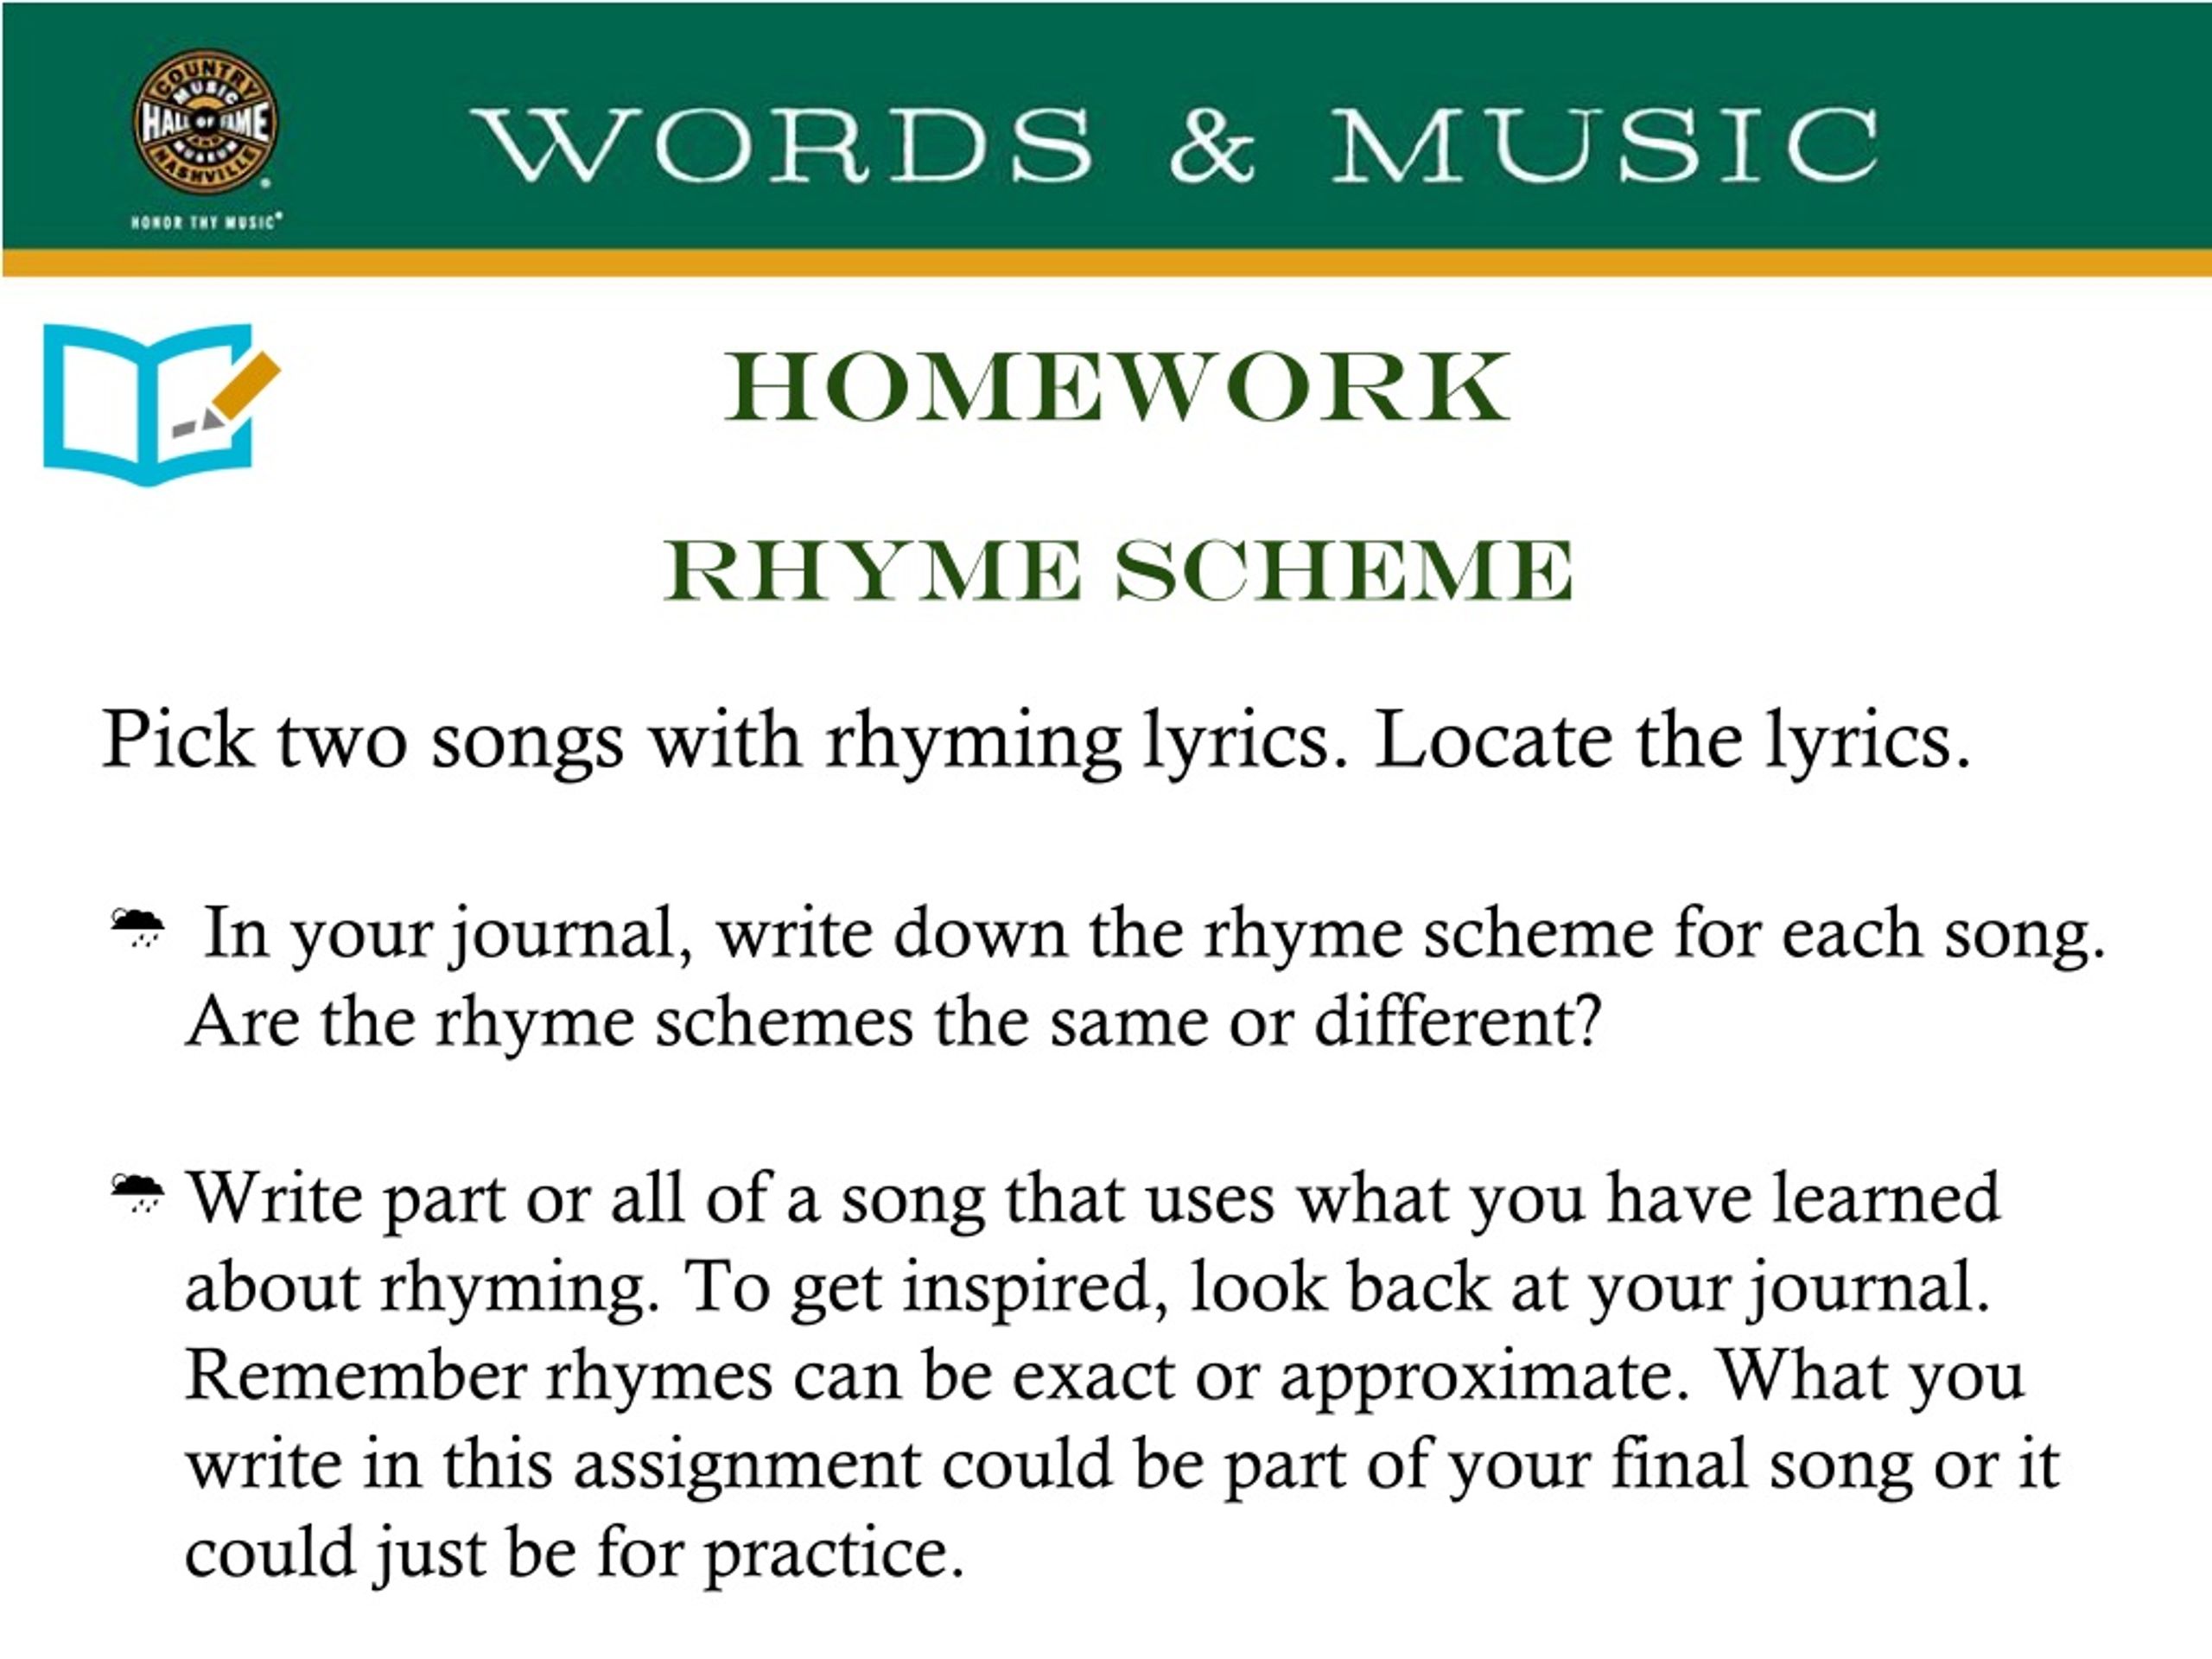 homework rhyme scheme